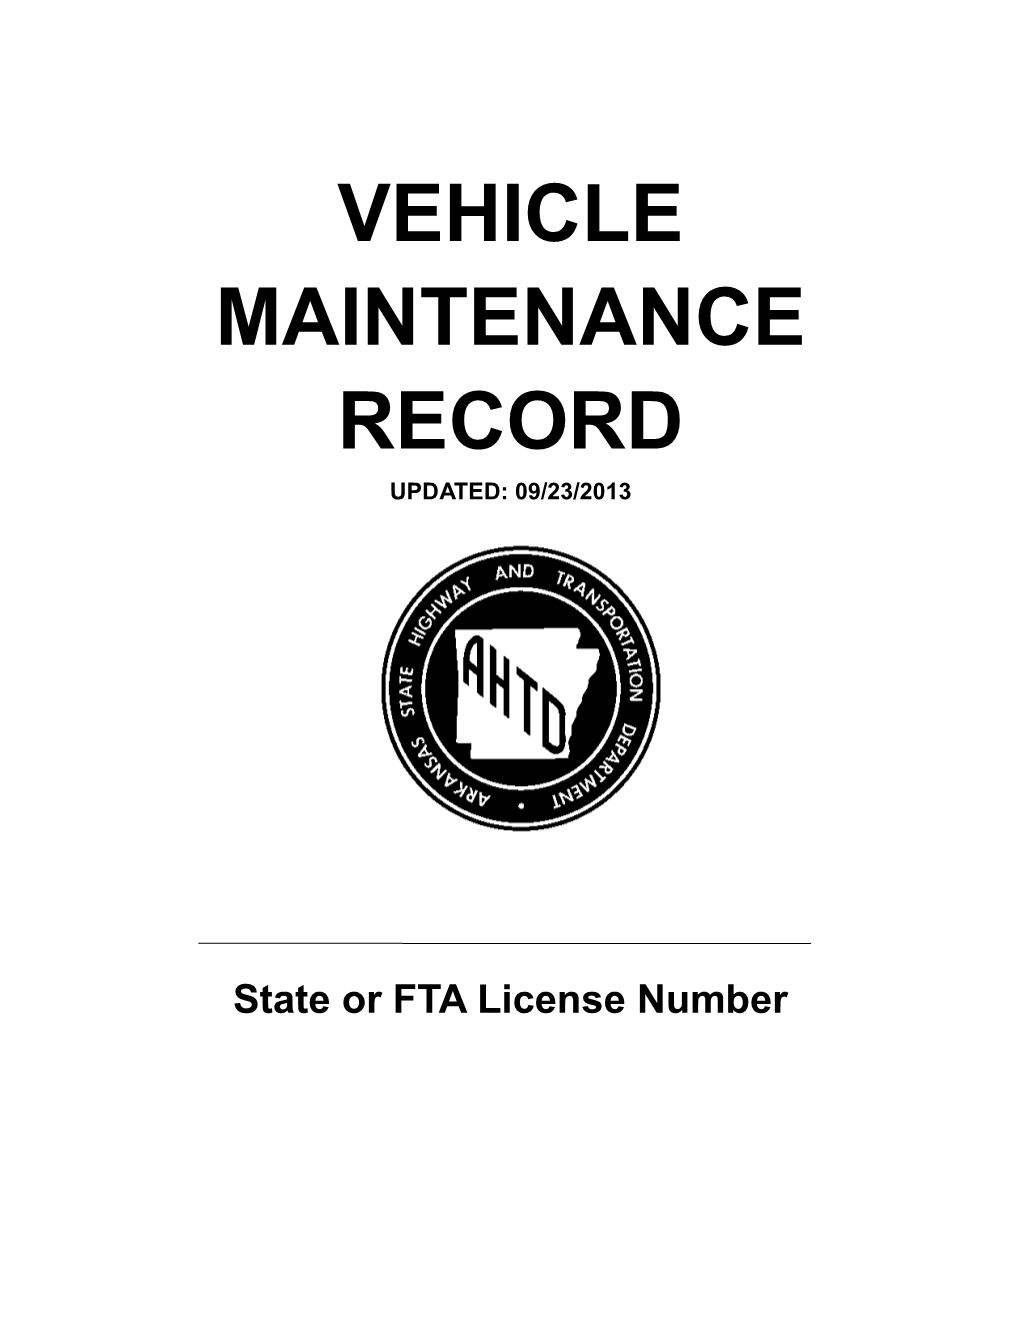 State Or FTA License Number